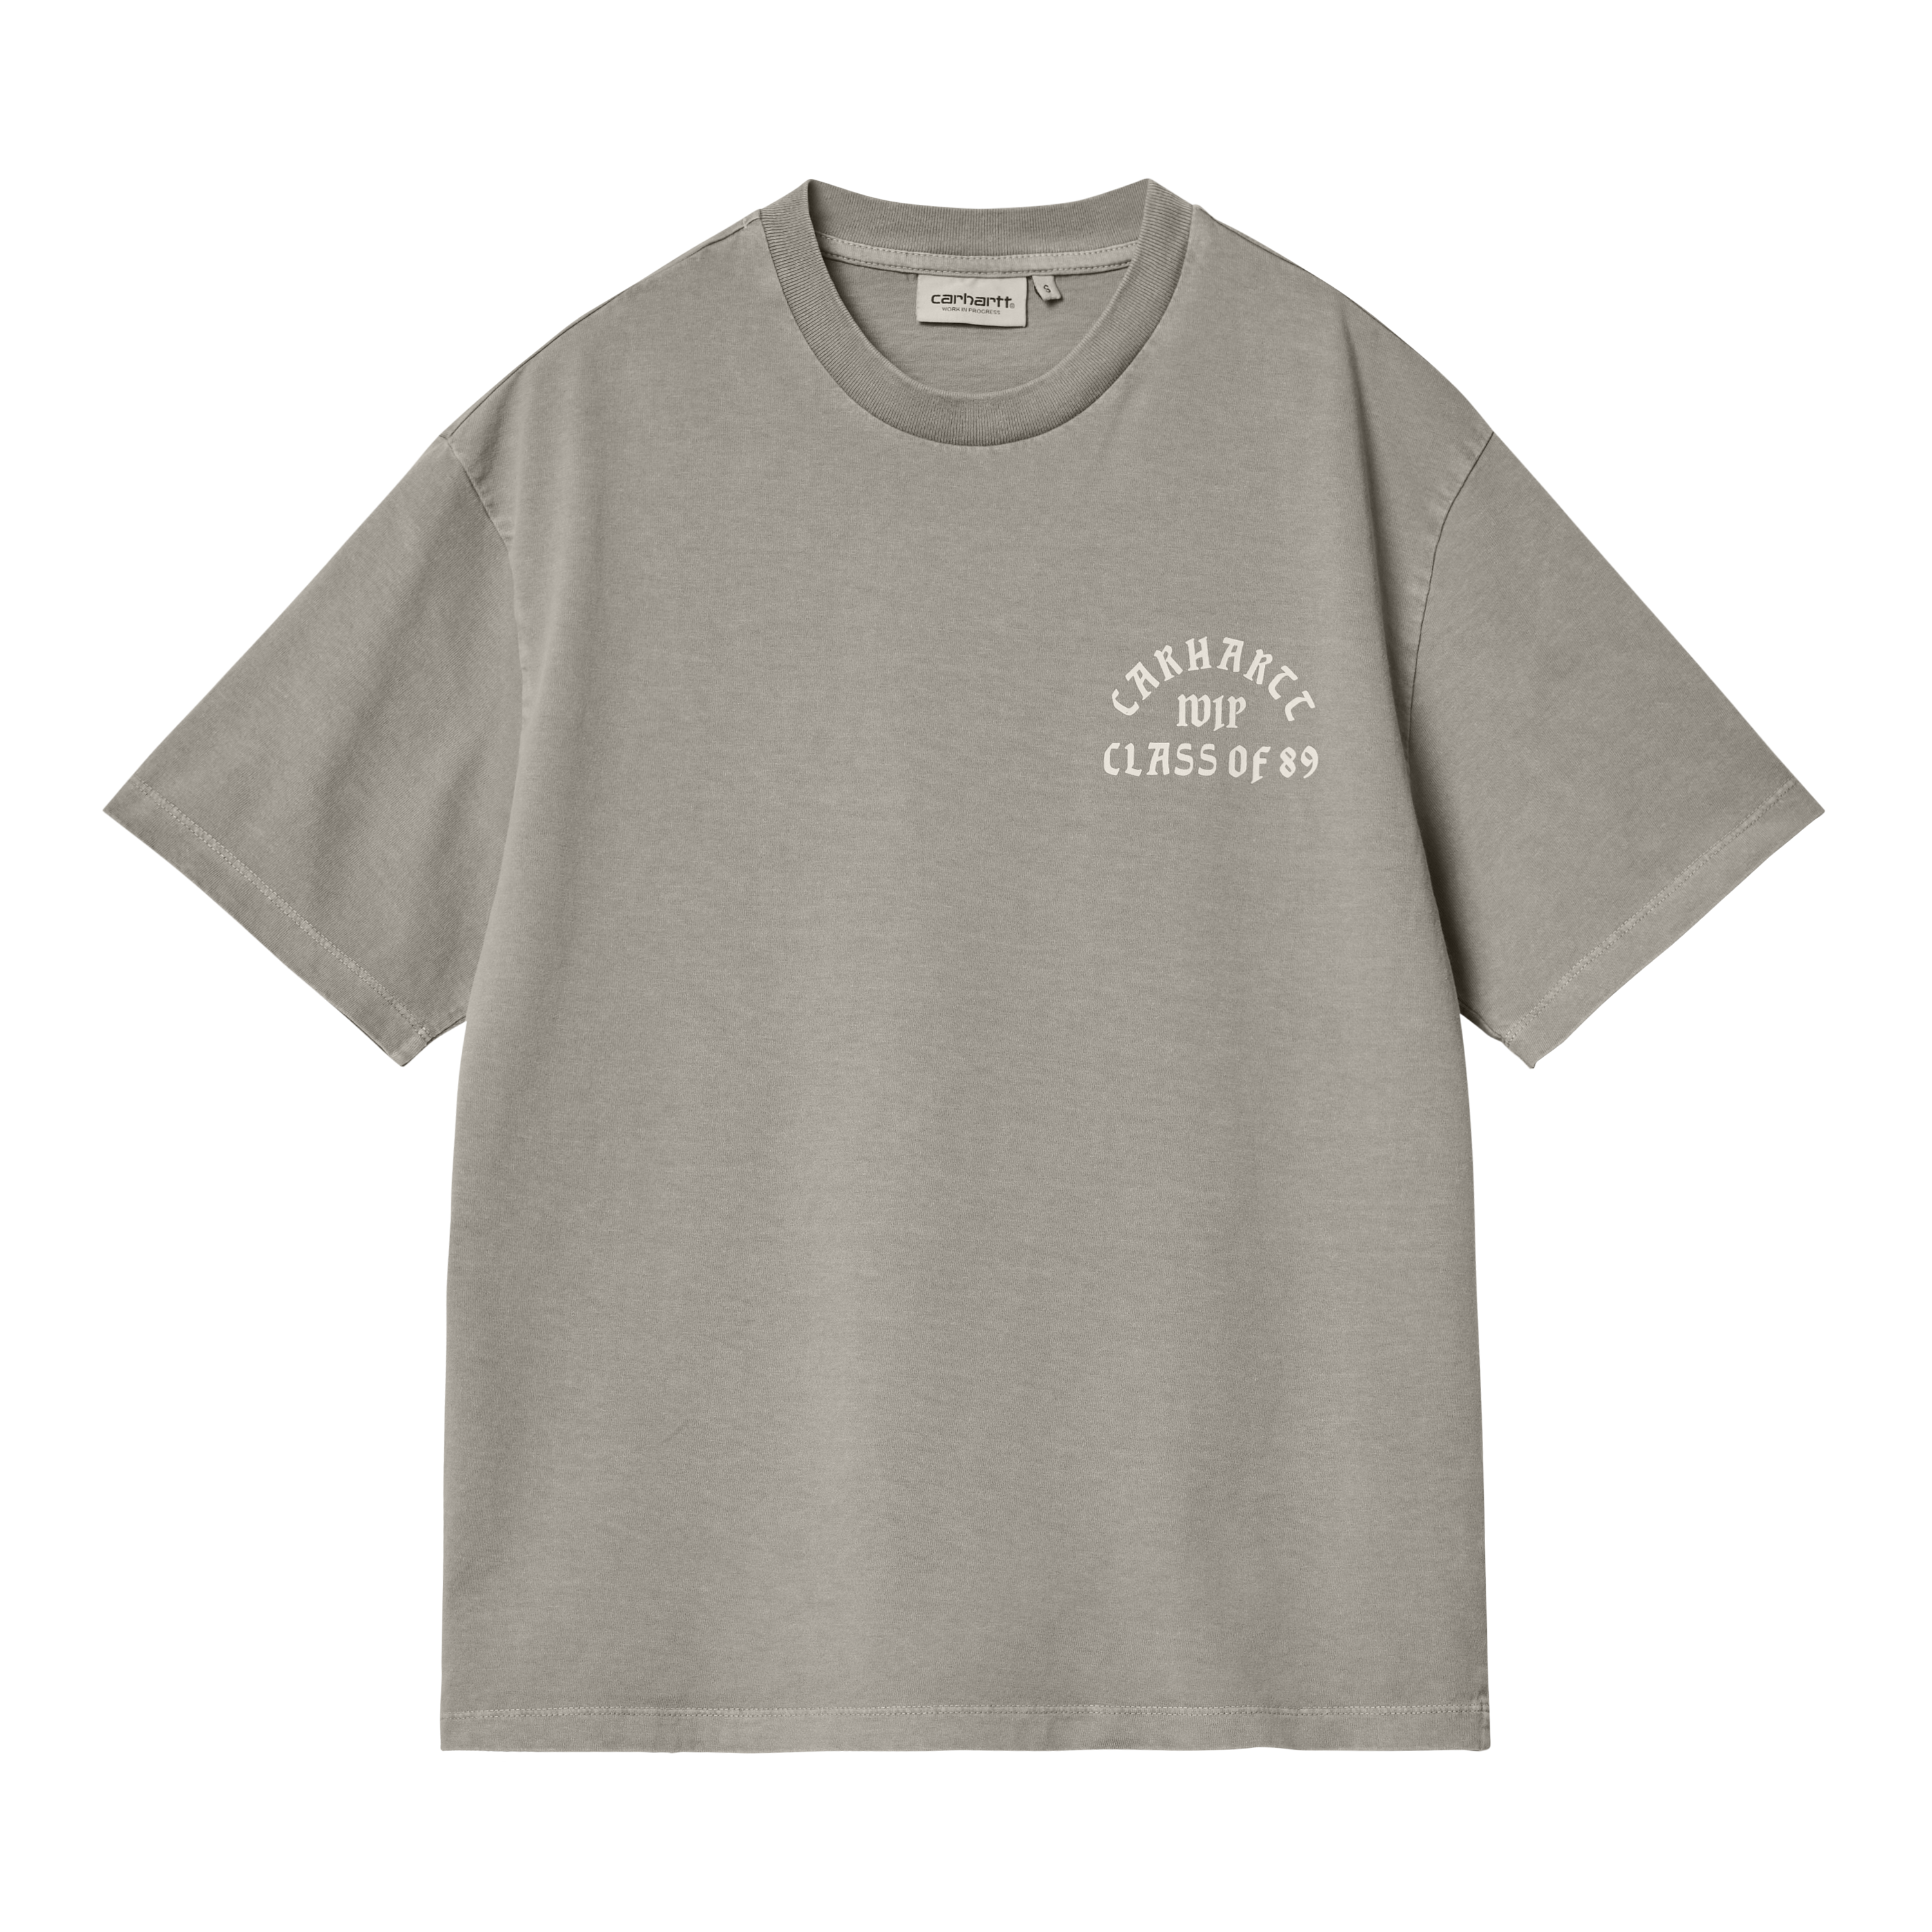 Carhartt WIP Women’s Short Sleeve Class of 89 T-Shirt in Grey